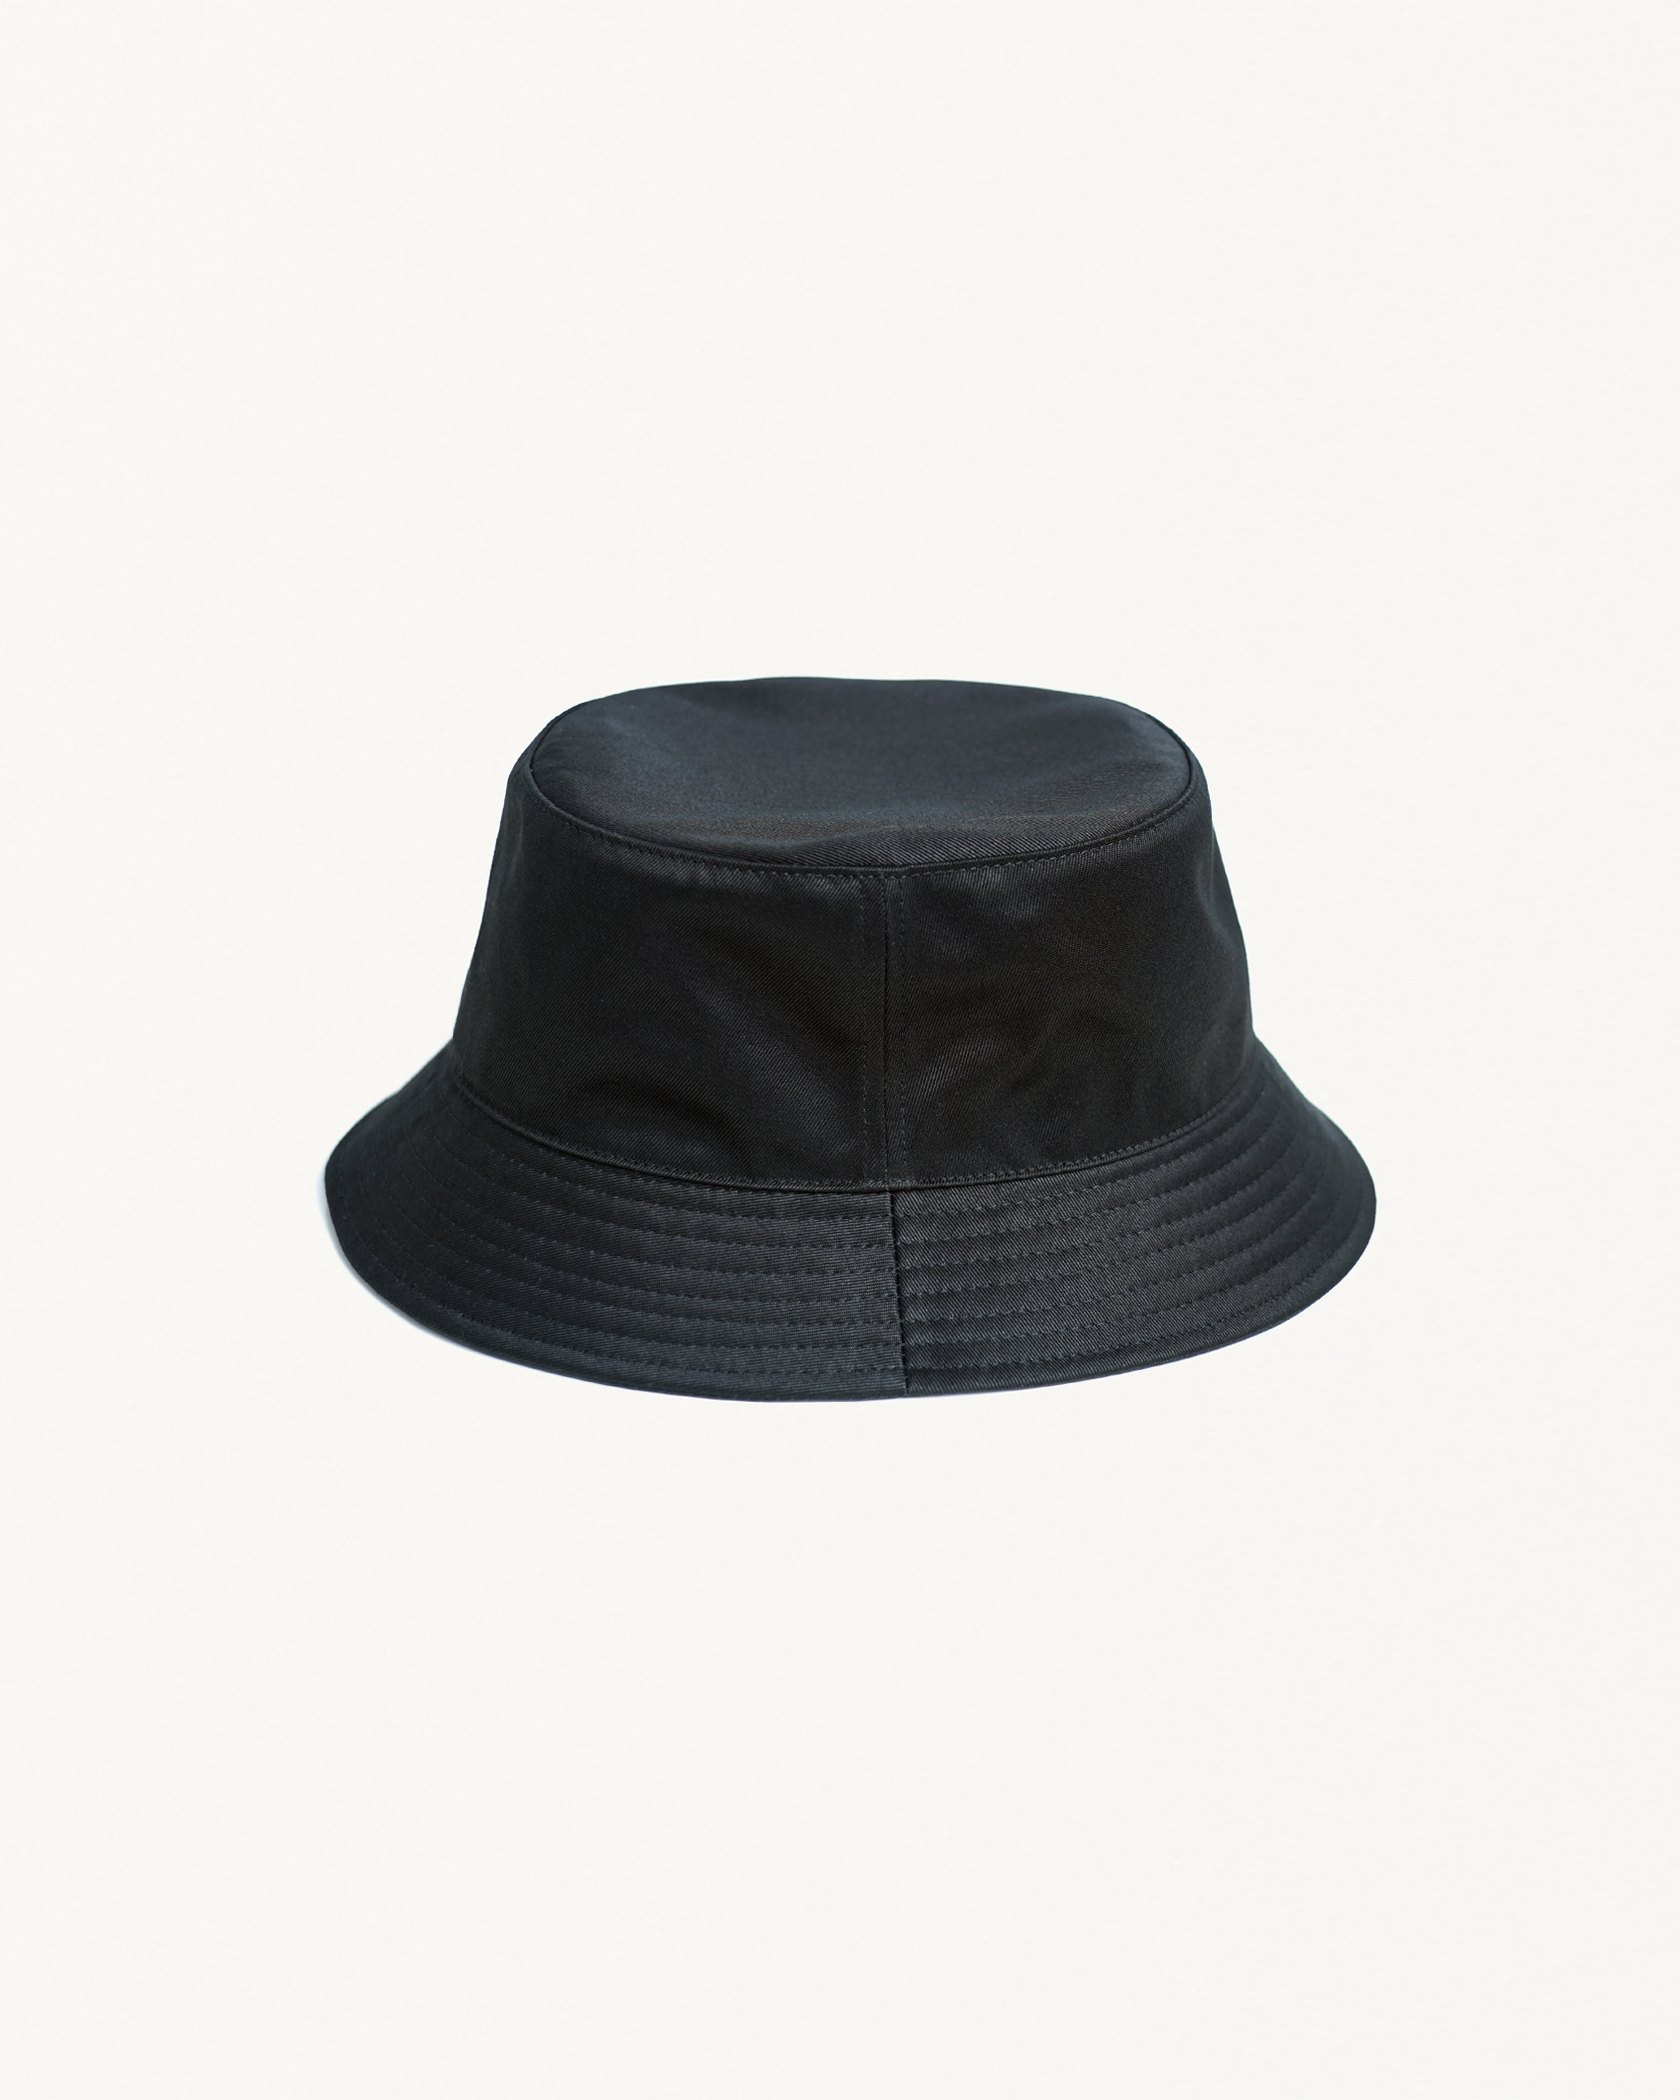 COTTON MOUNT HAT 2.0 詳細画像 Black x Black 3